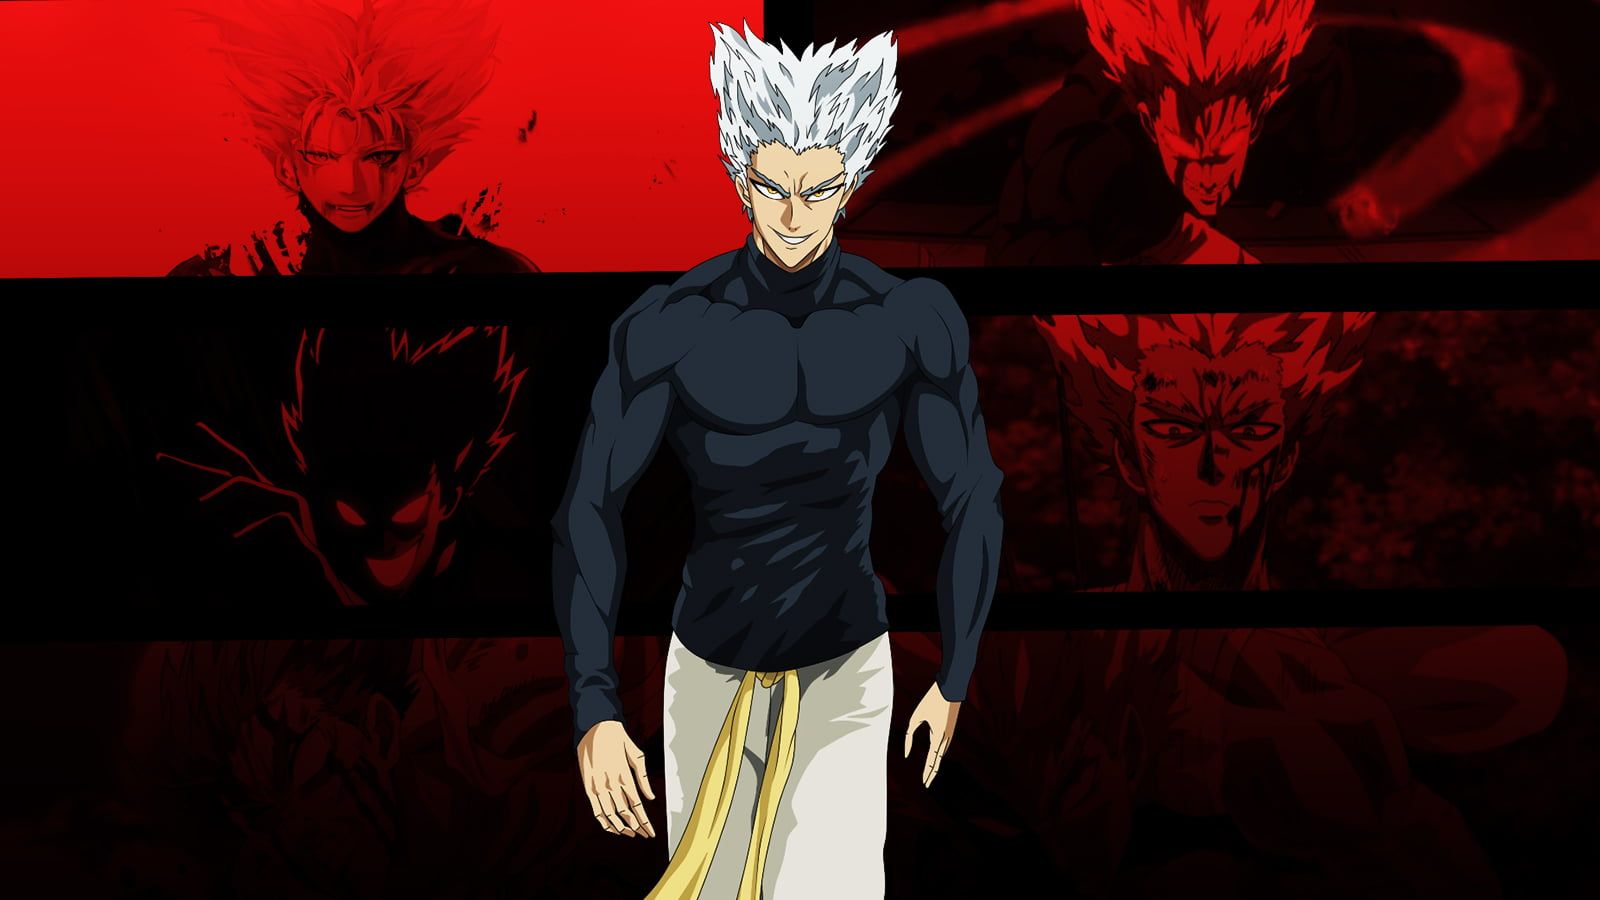 HD Wallpaper: One Punch Man, Garou. One Punch Man, One Punch Man Anime, Saitama One Punch Man